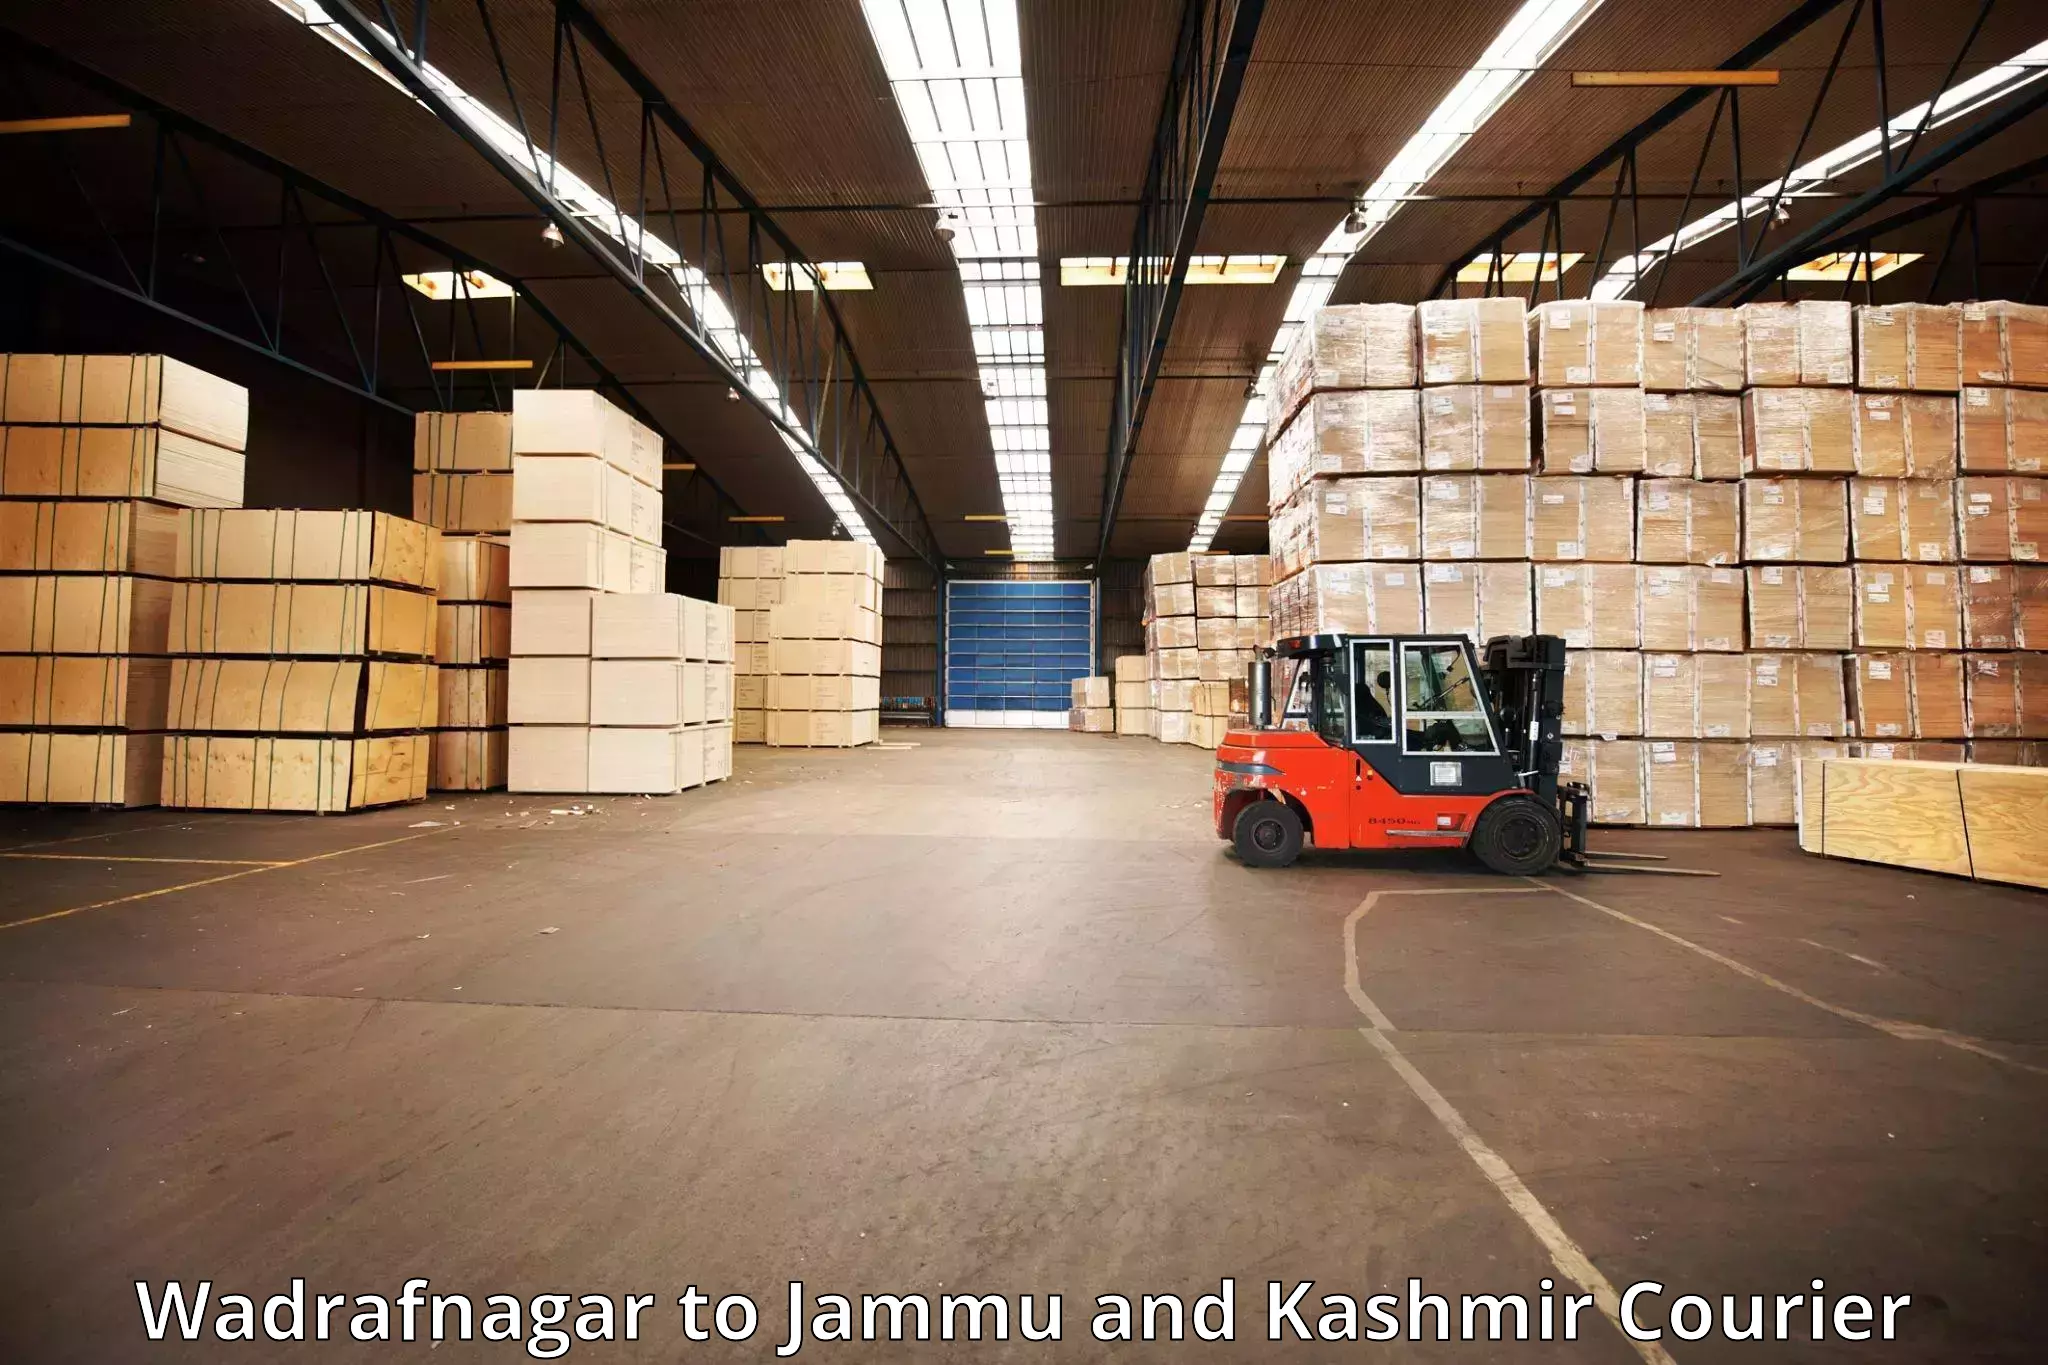 Baggage shipping service Wadrafnagar to Leh